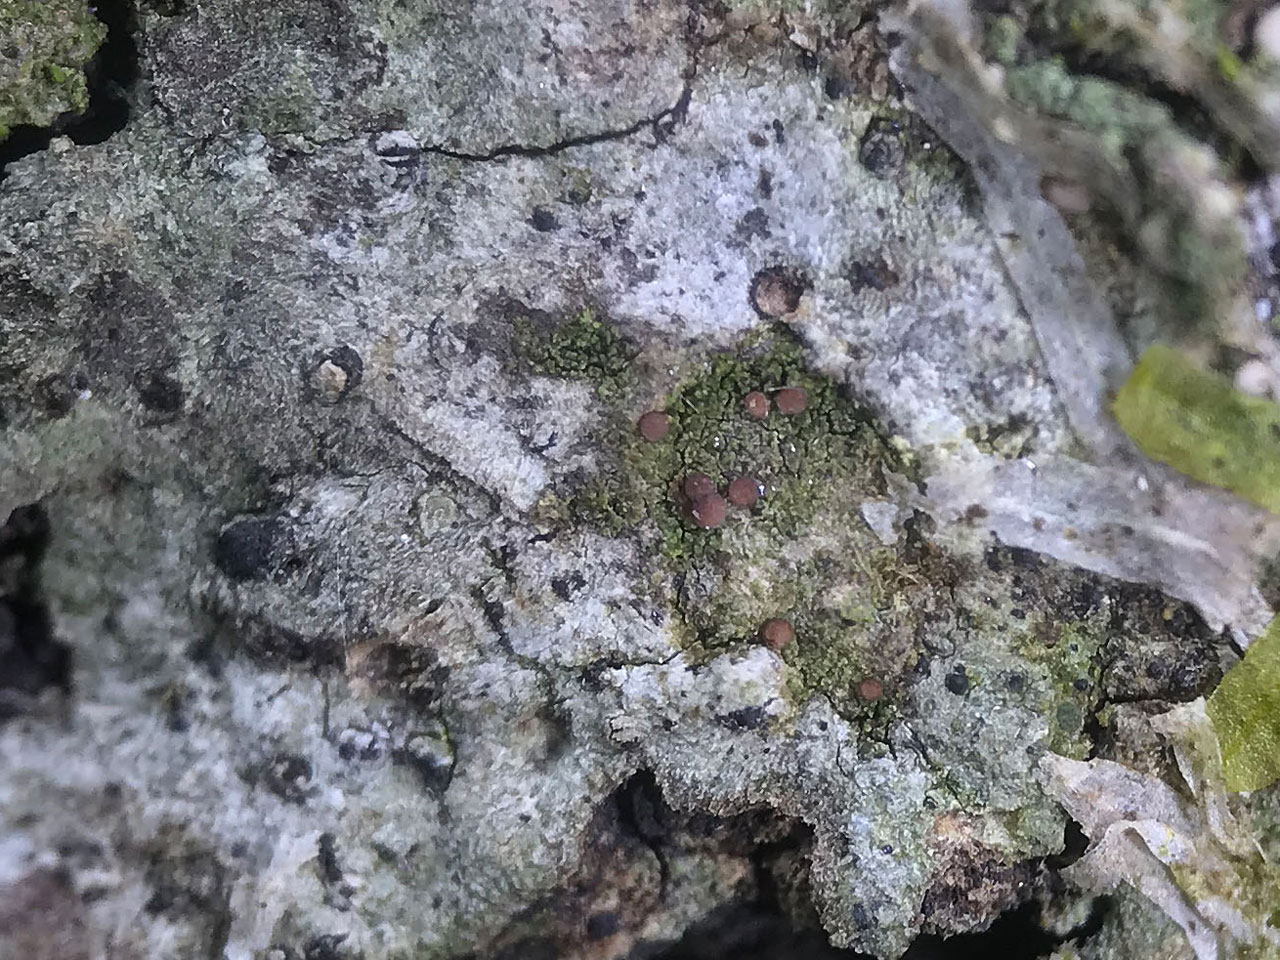 Scutula circumspecta, pigment deficient form, Beech, Busketts Wood, New Forest